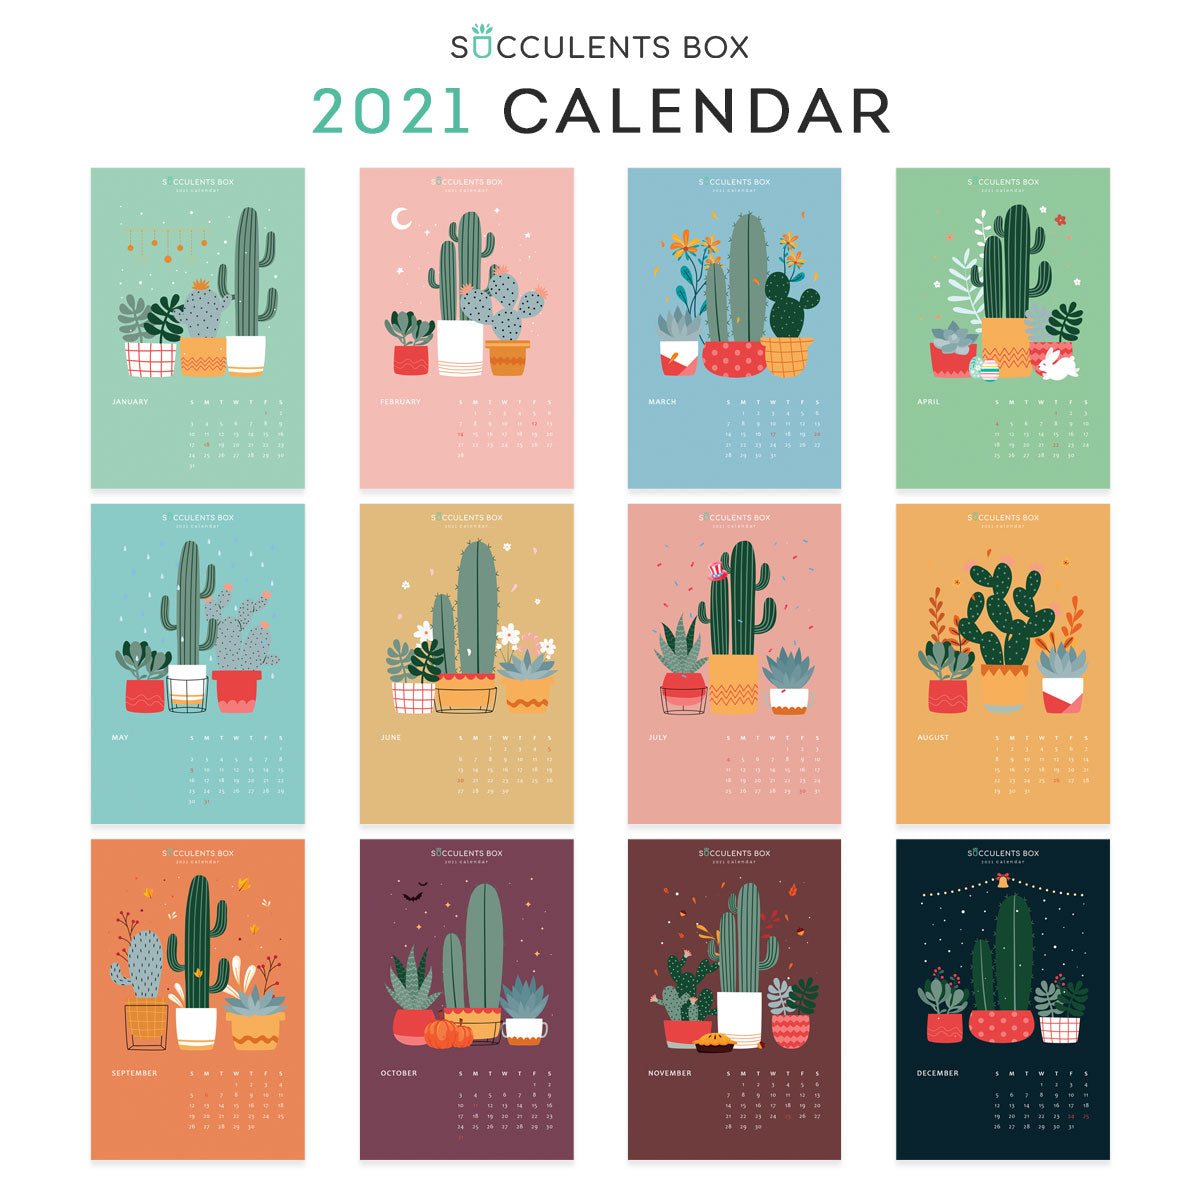 2021 Monthly Succulent Colorful Calendar Free Printable 2021 Plants Download Succulents Box